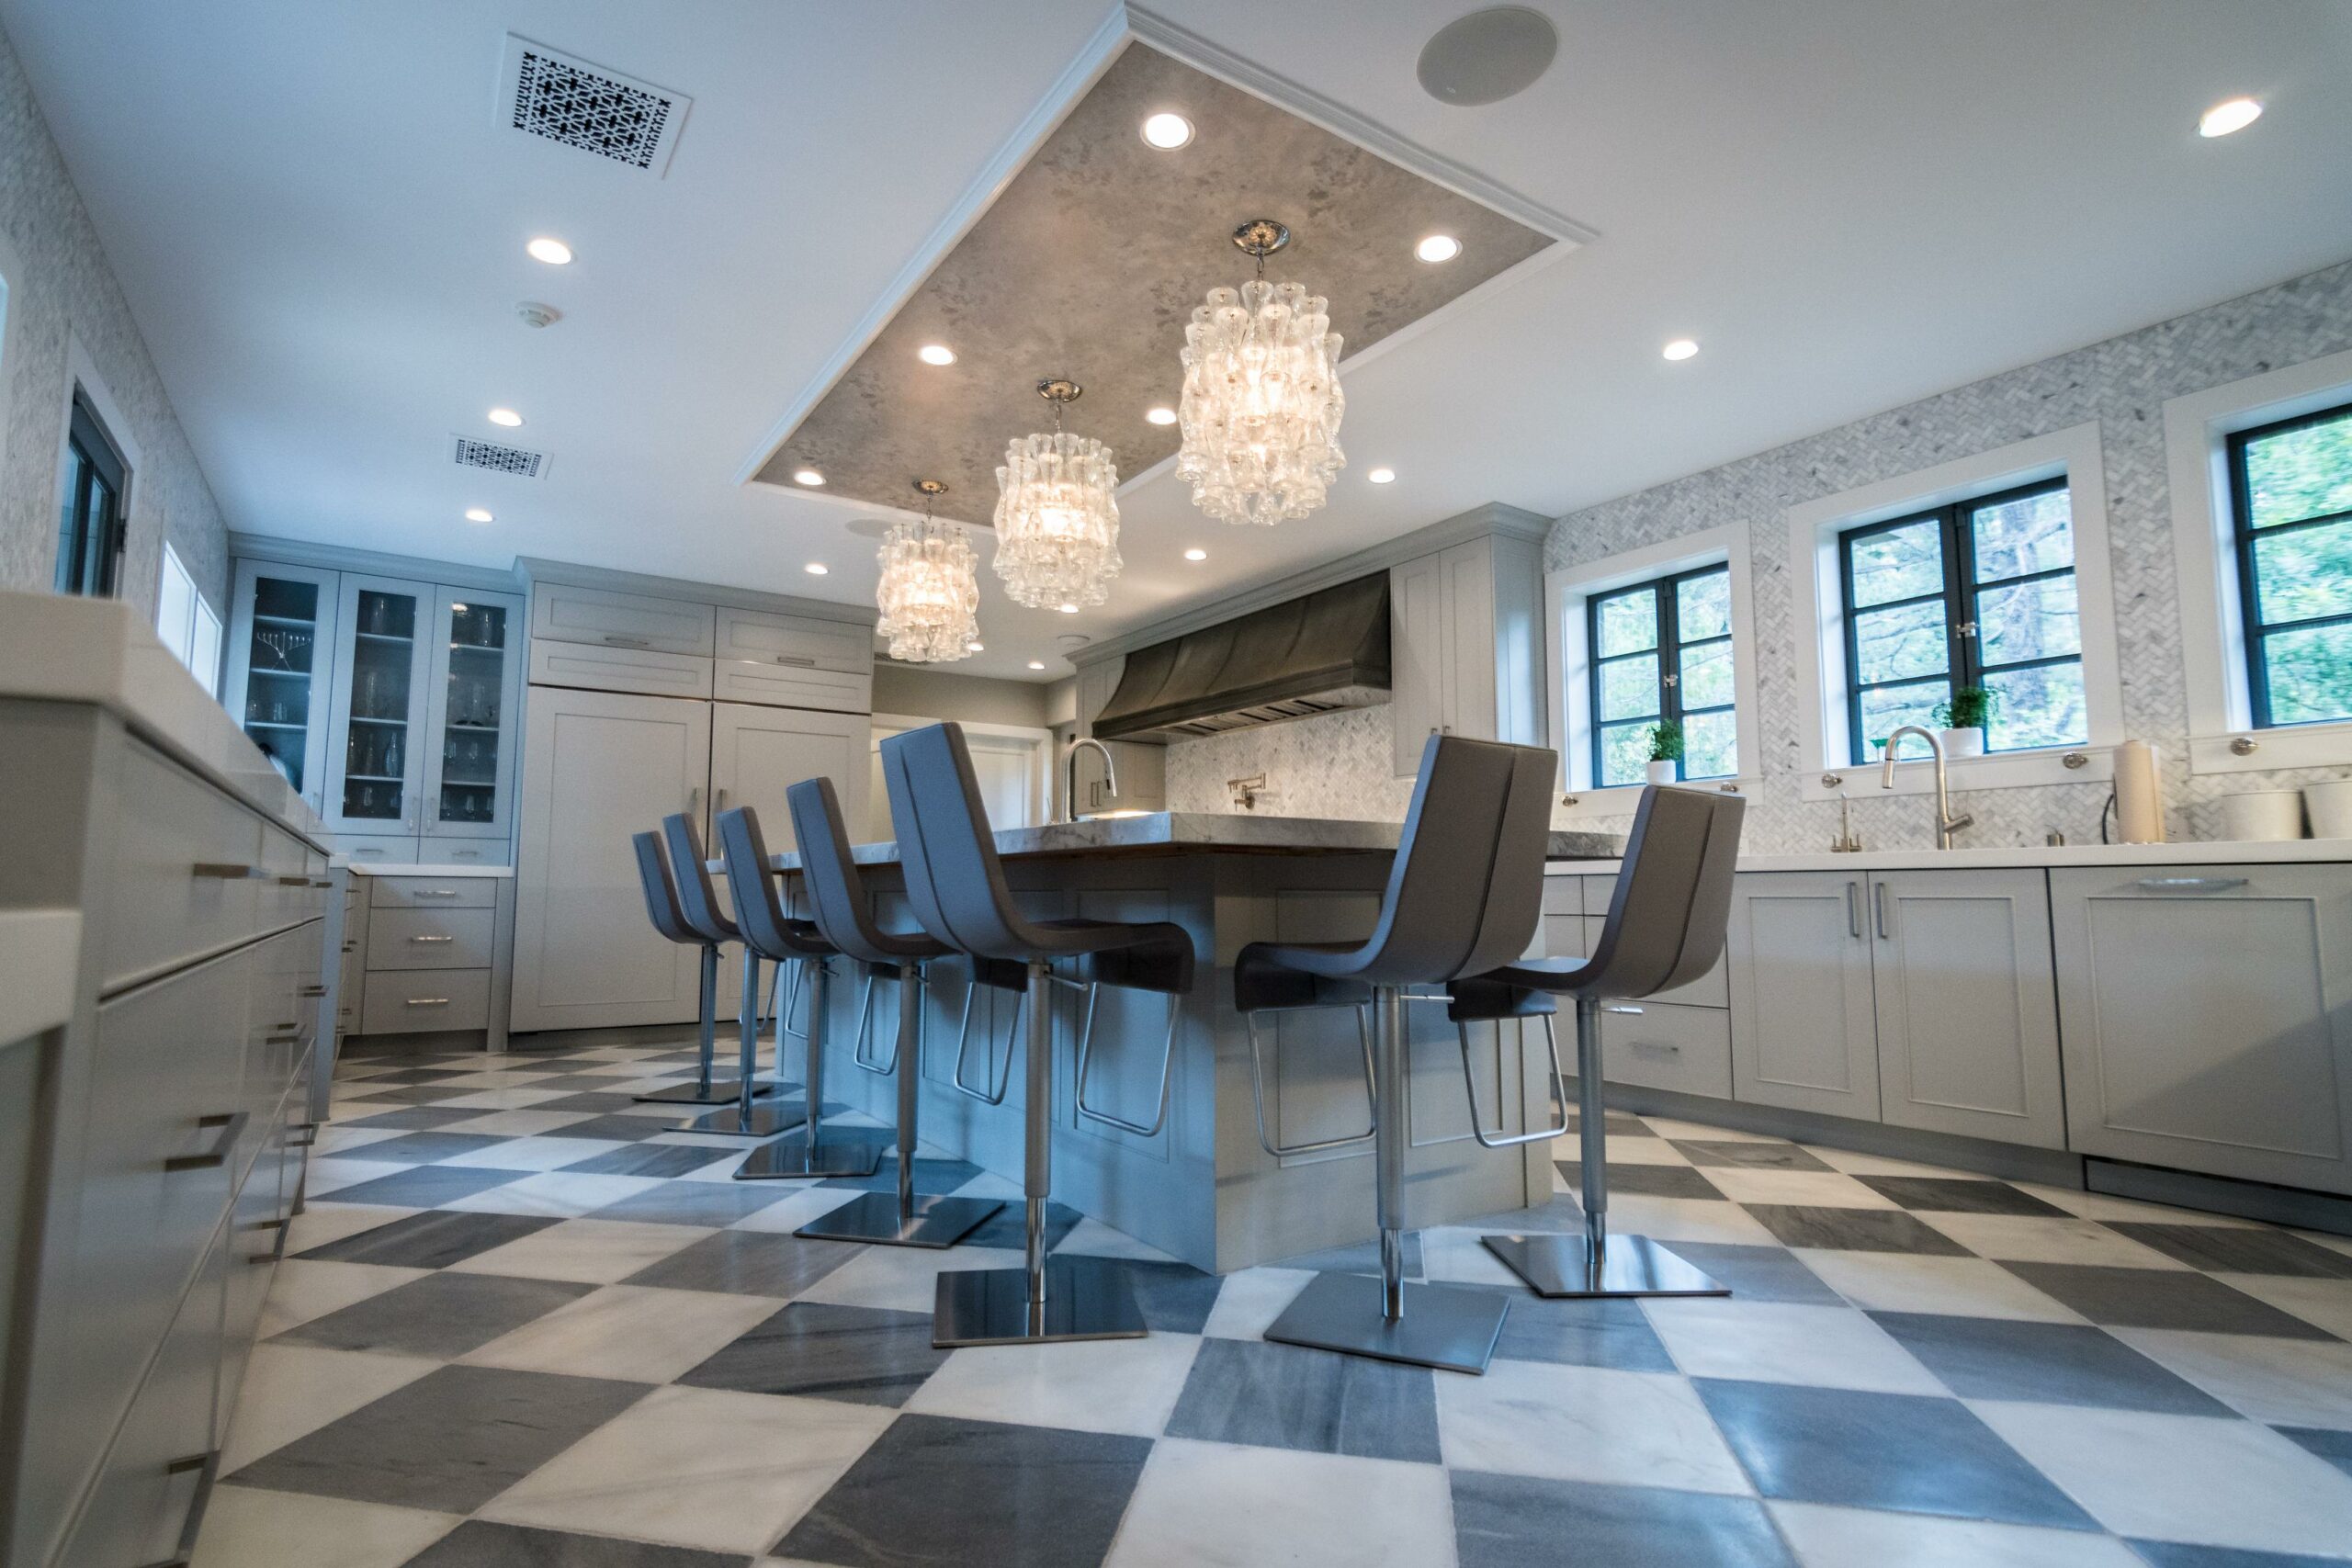 Elegant modern kitchen with island and bar stools.